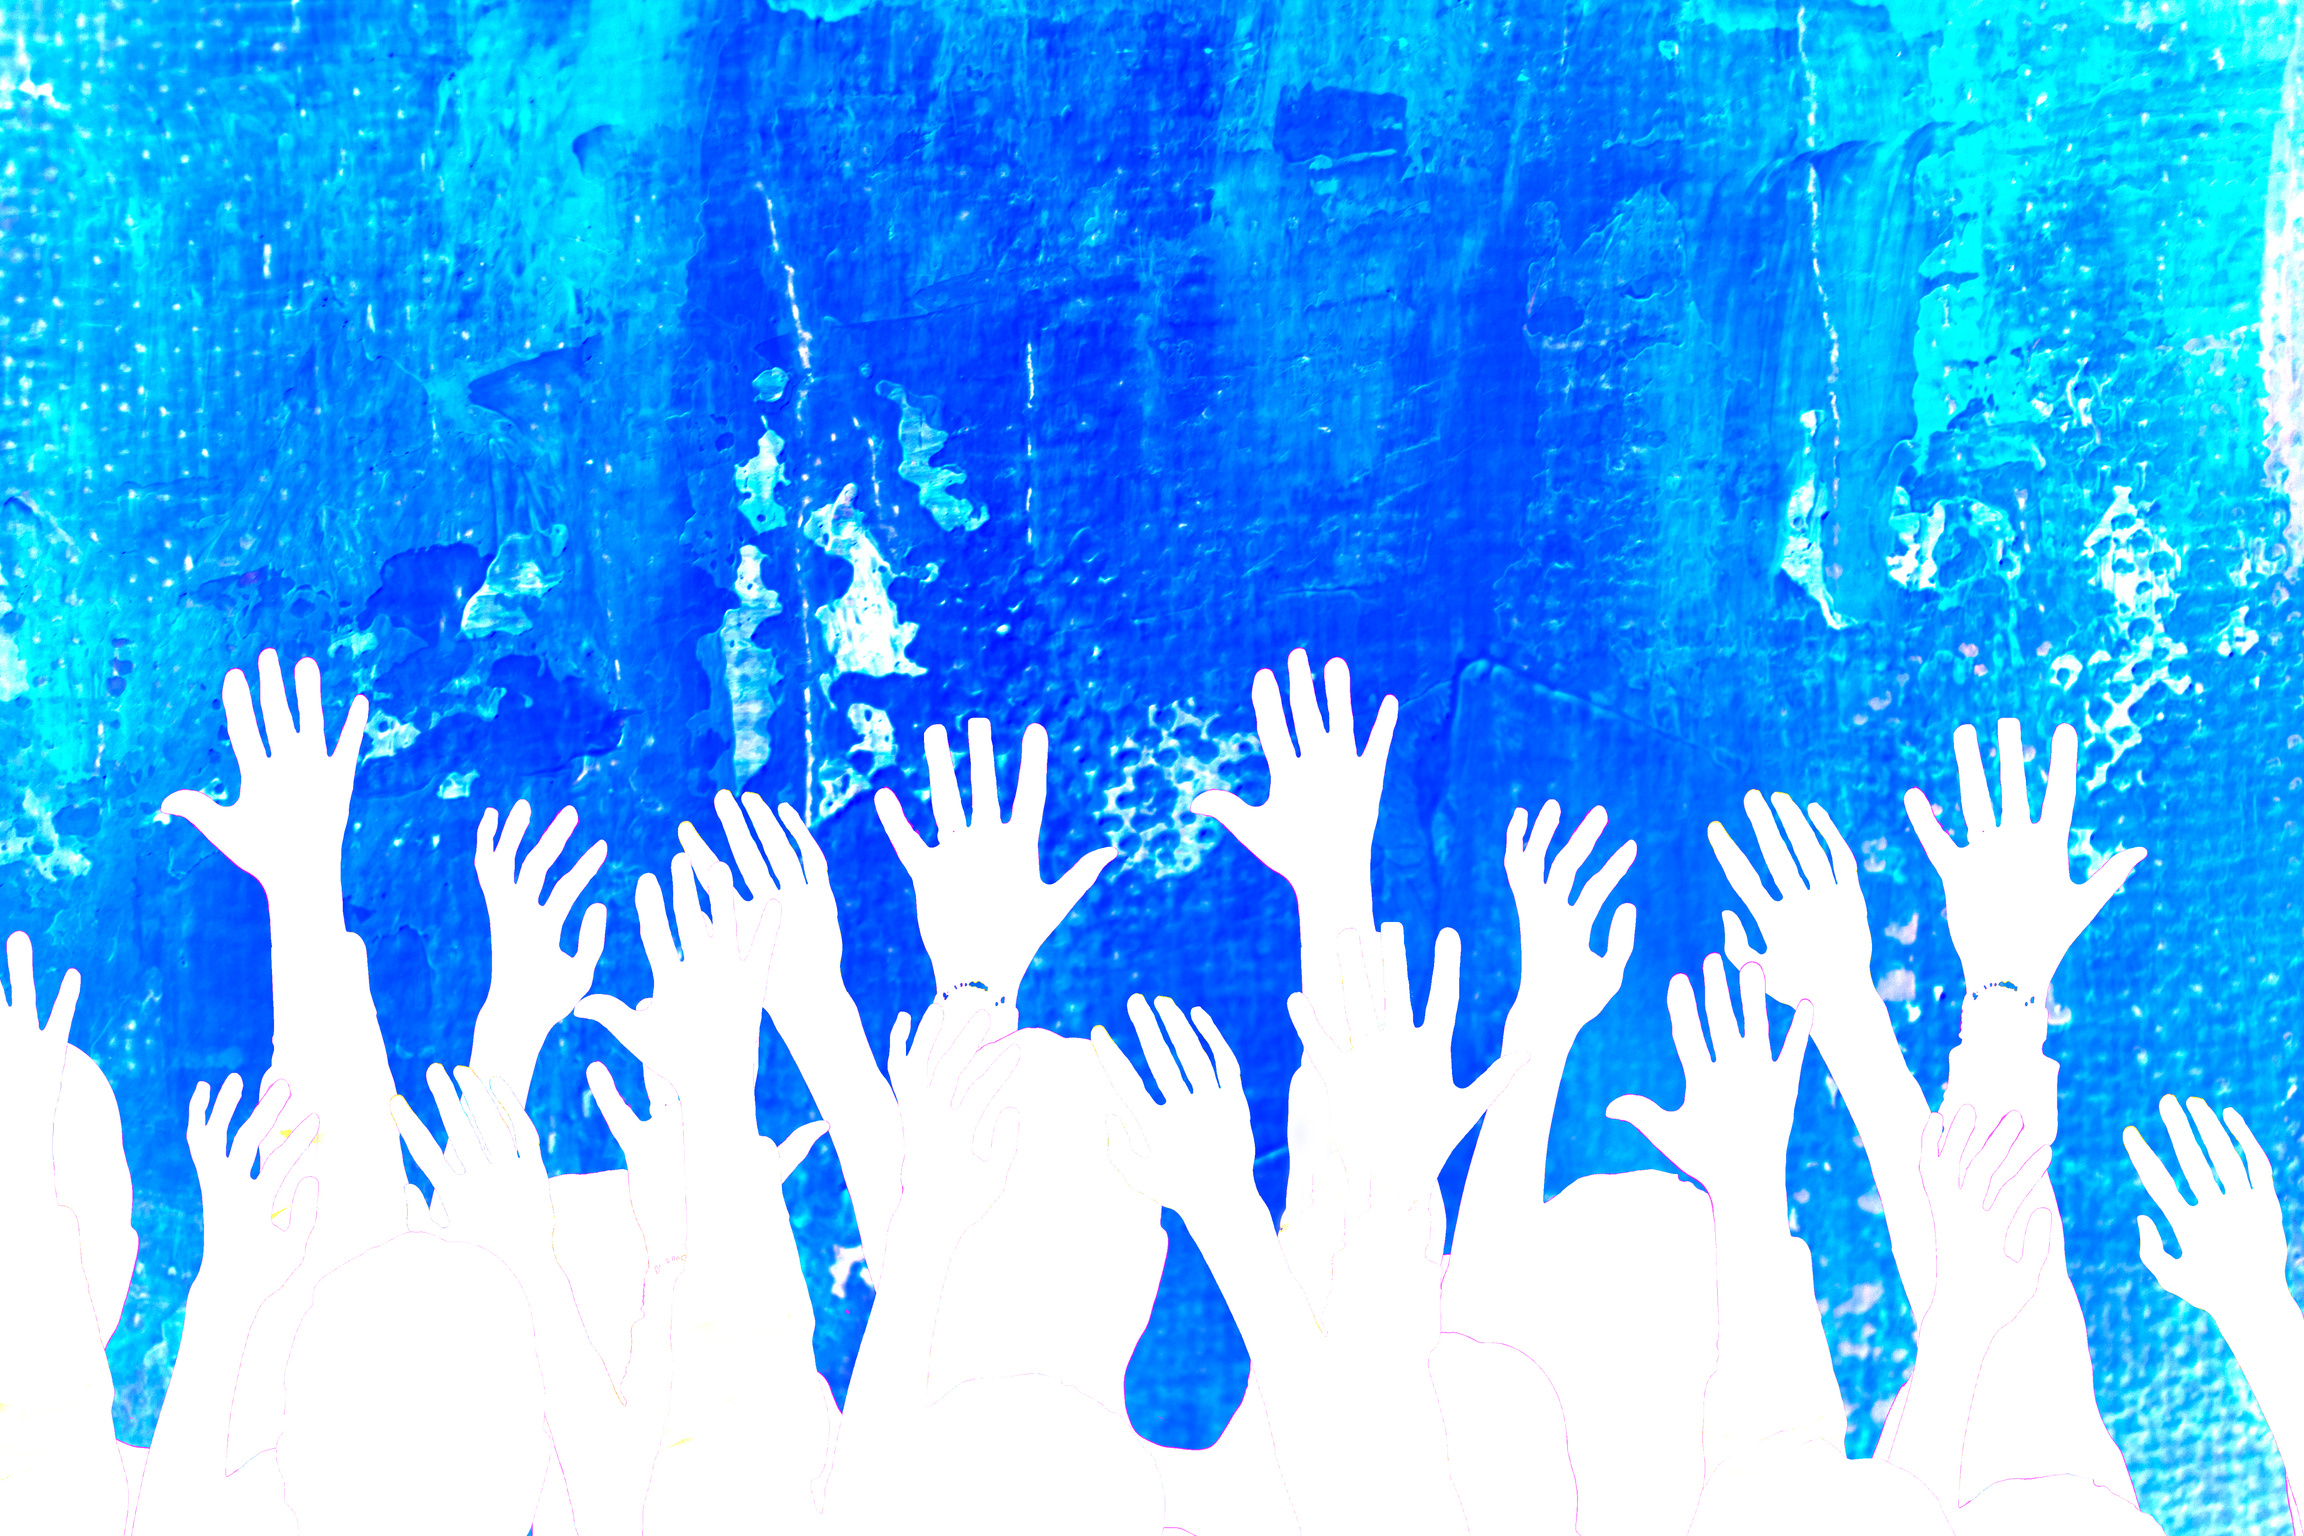 Blue textured background. Volunteers, voting. Hands raised.